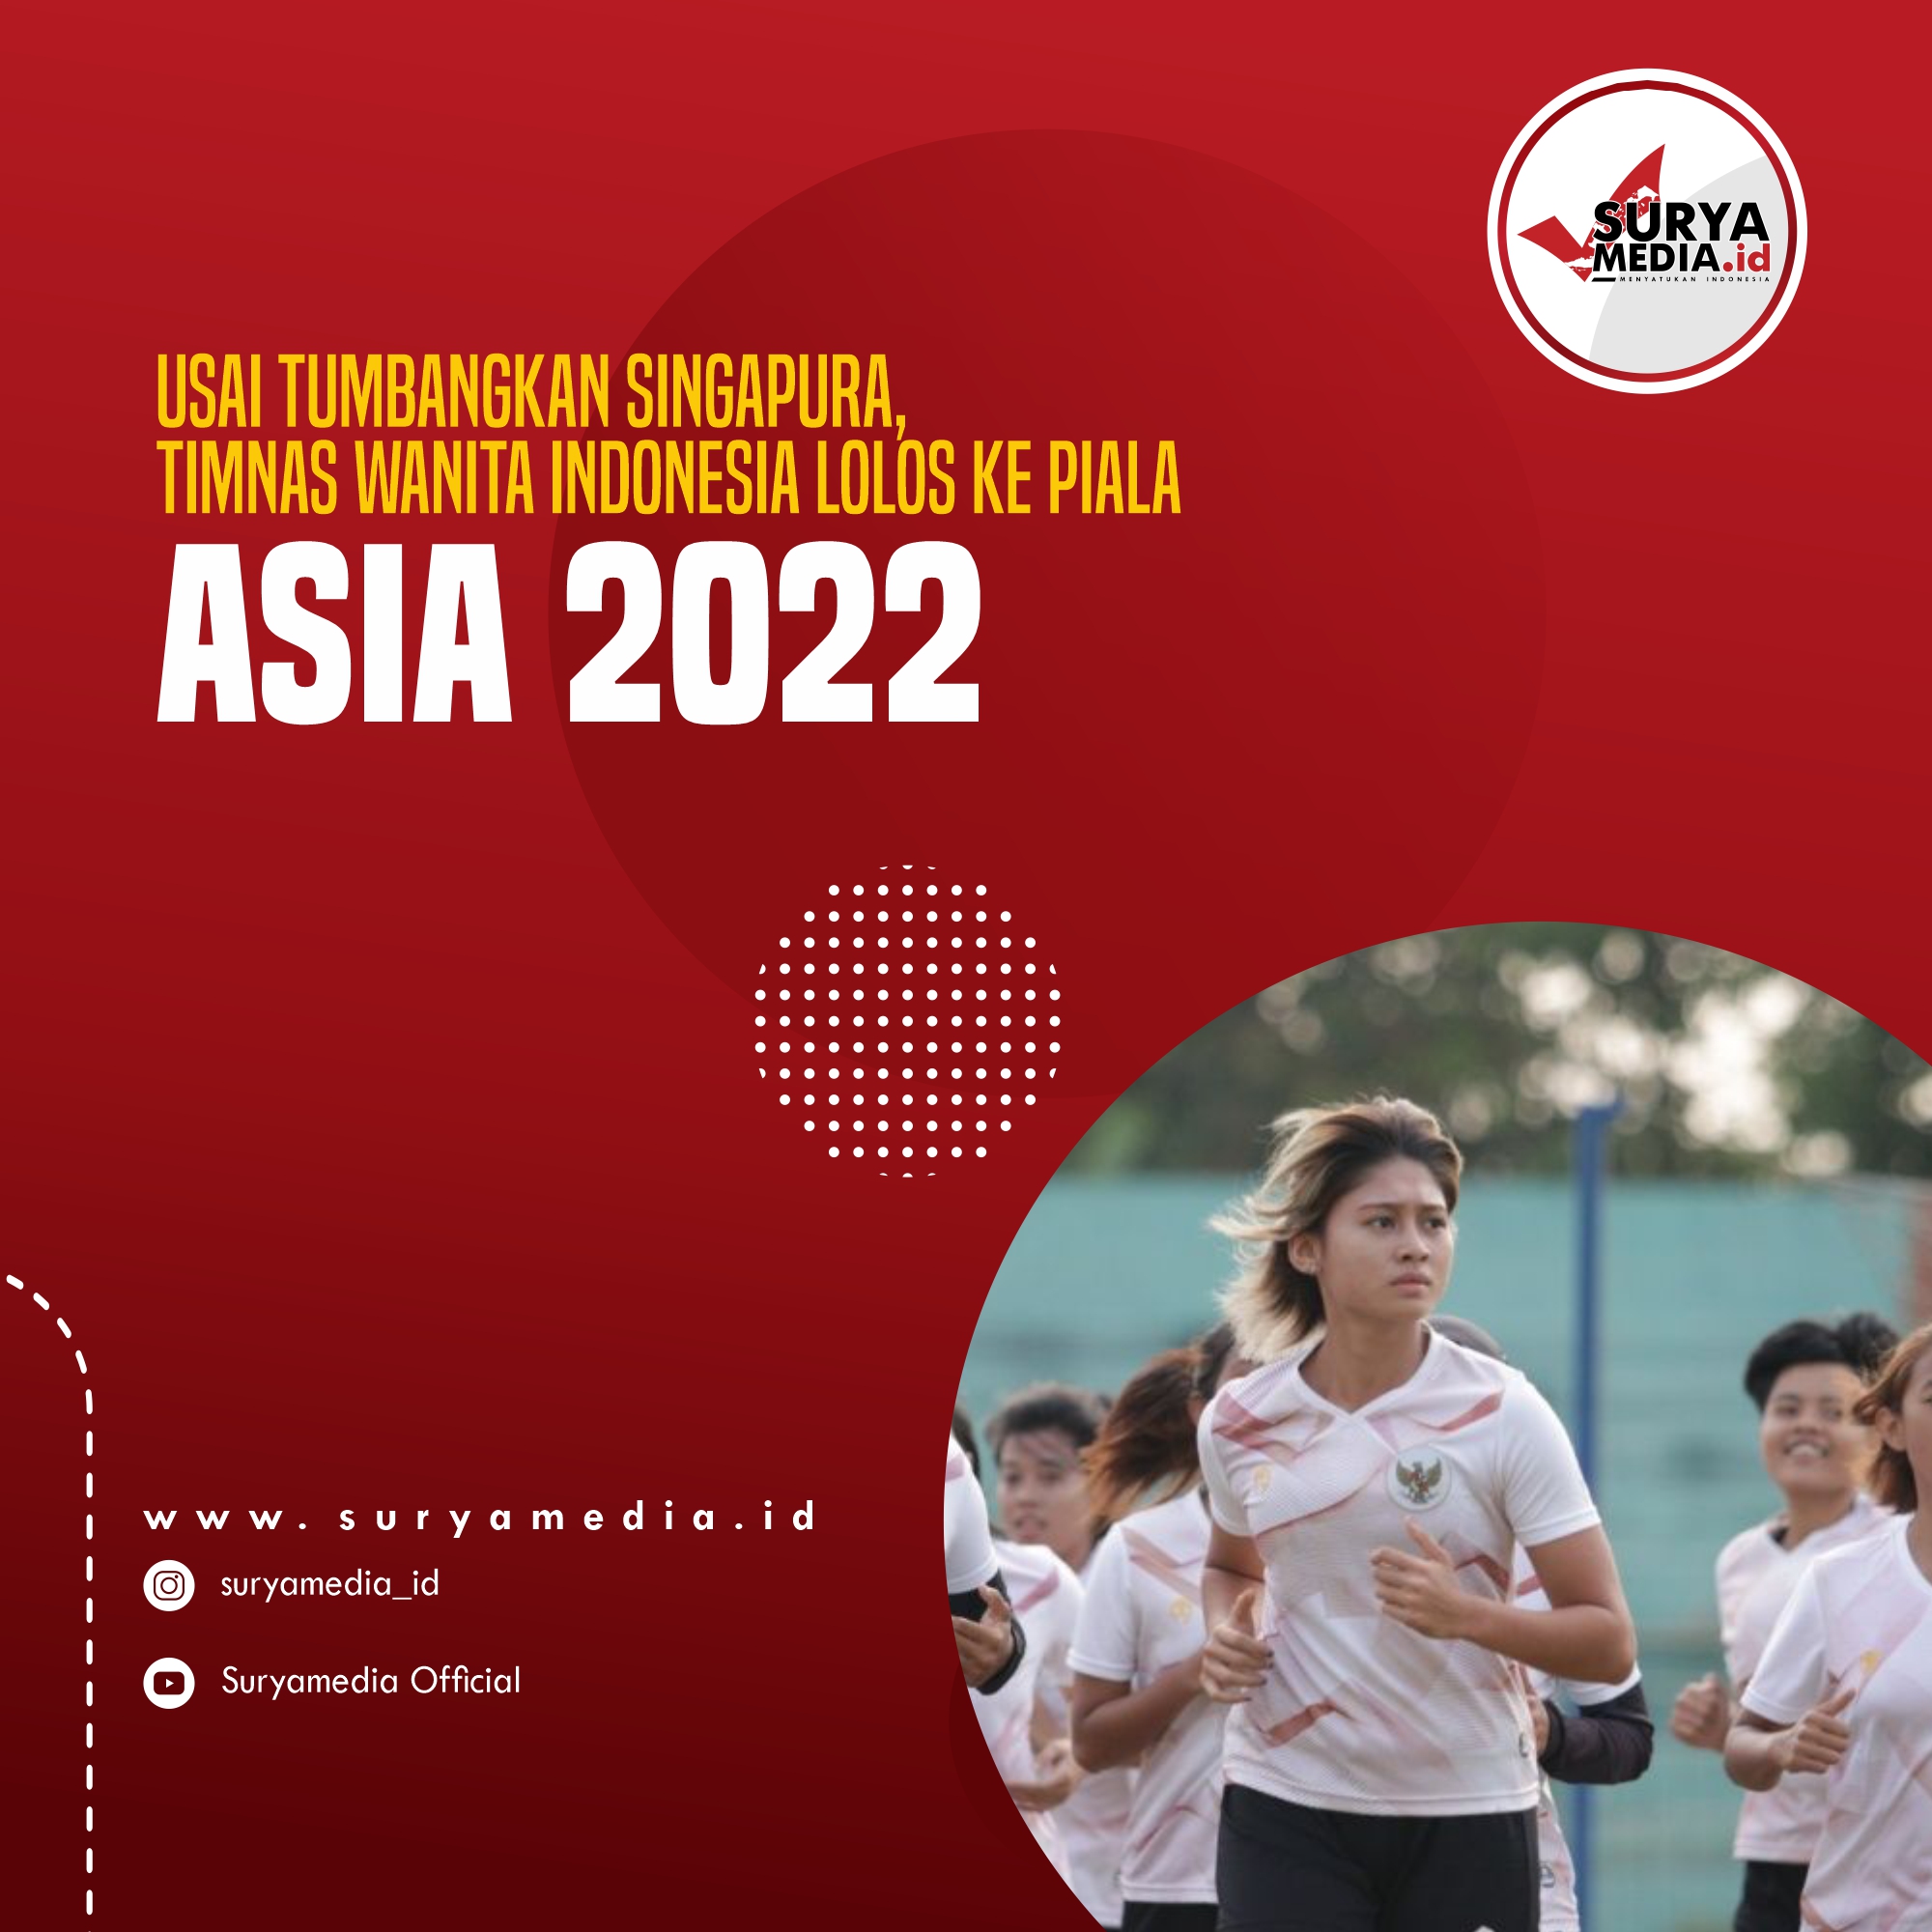 Usai tumbangkan singapura, timnas wanita indonesia lolos ke piala asia 2022